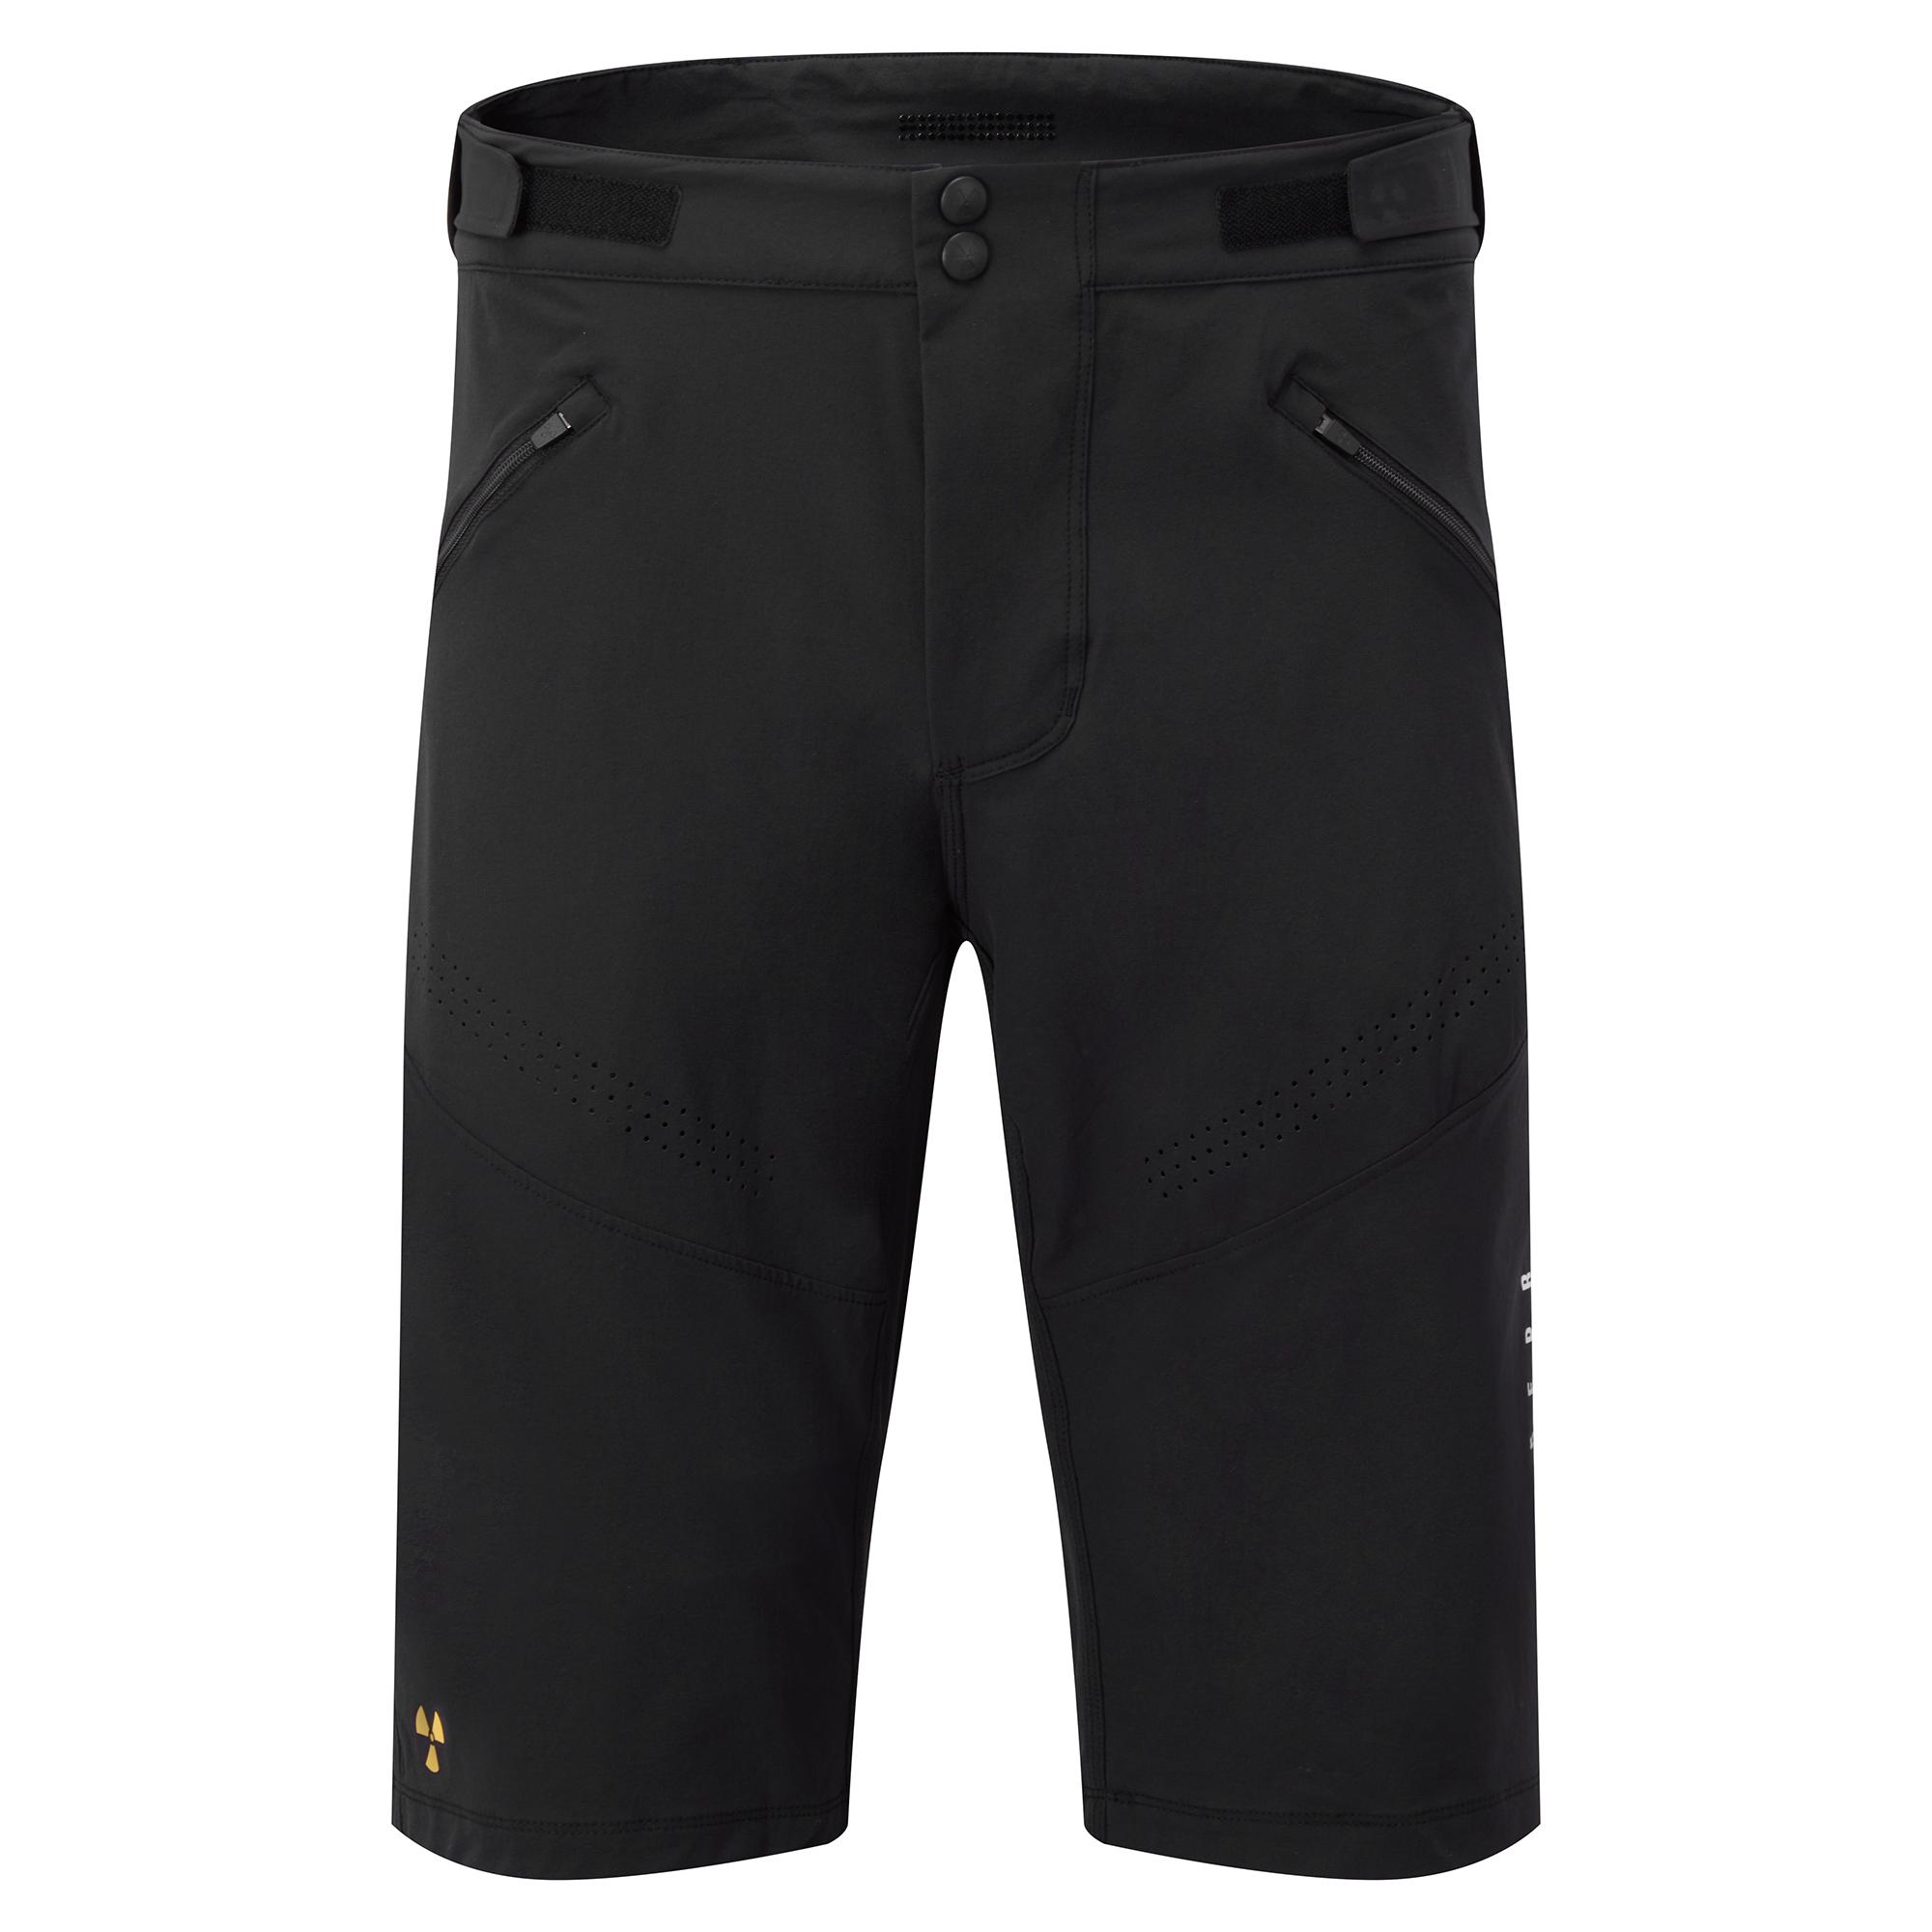 Nukeproof Blackline Mens Shorts With Liner